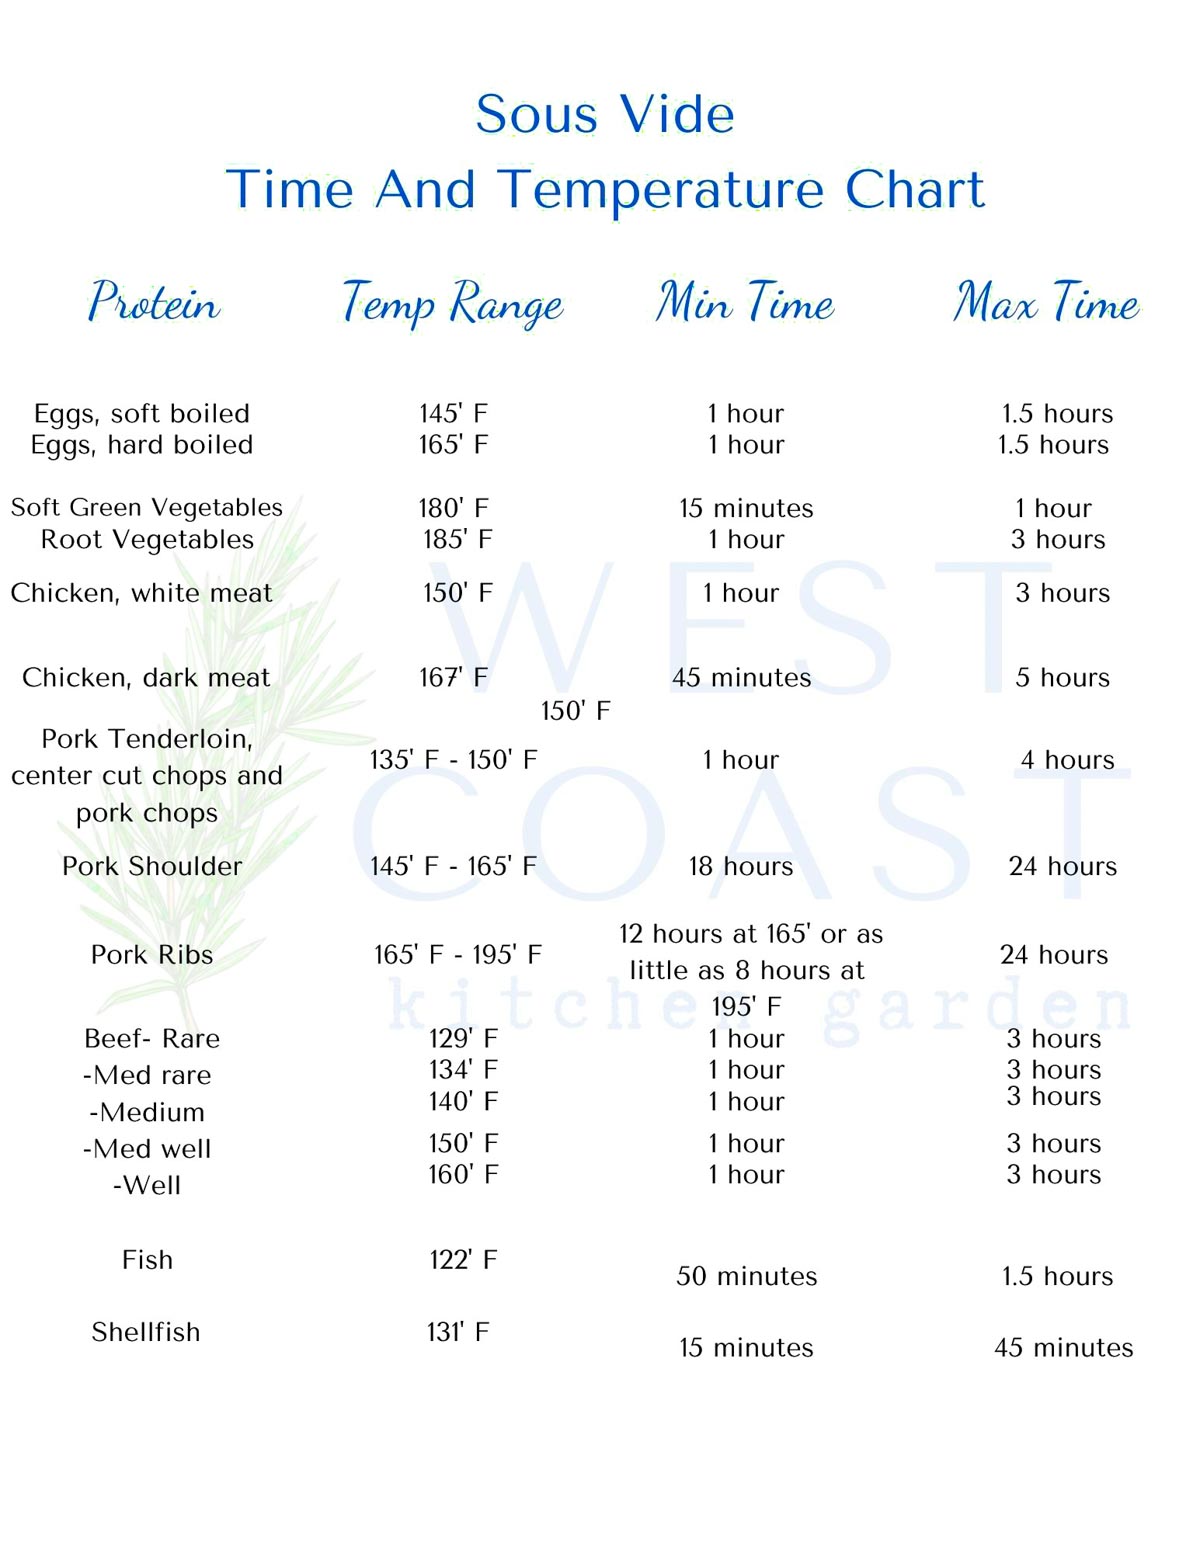 Langt væk underholdning maling Sous vide pork tenderloin with time and temperature chart